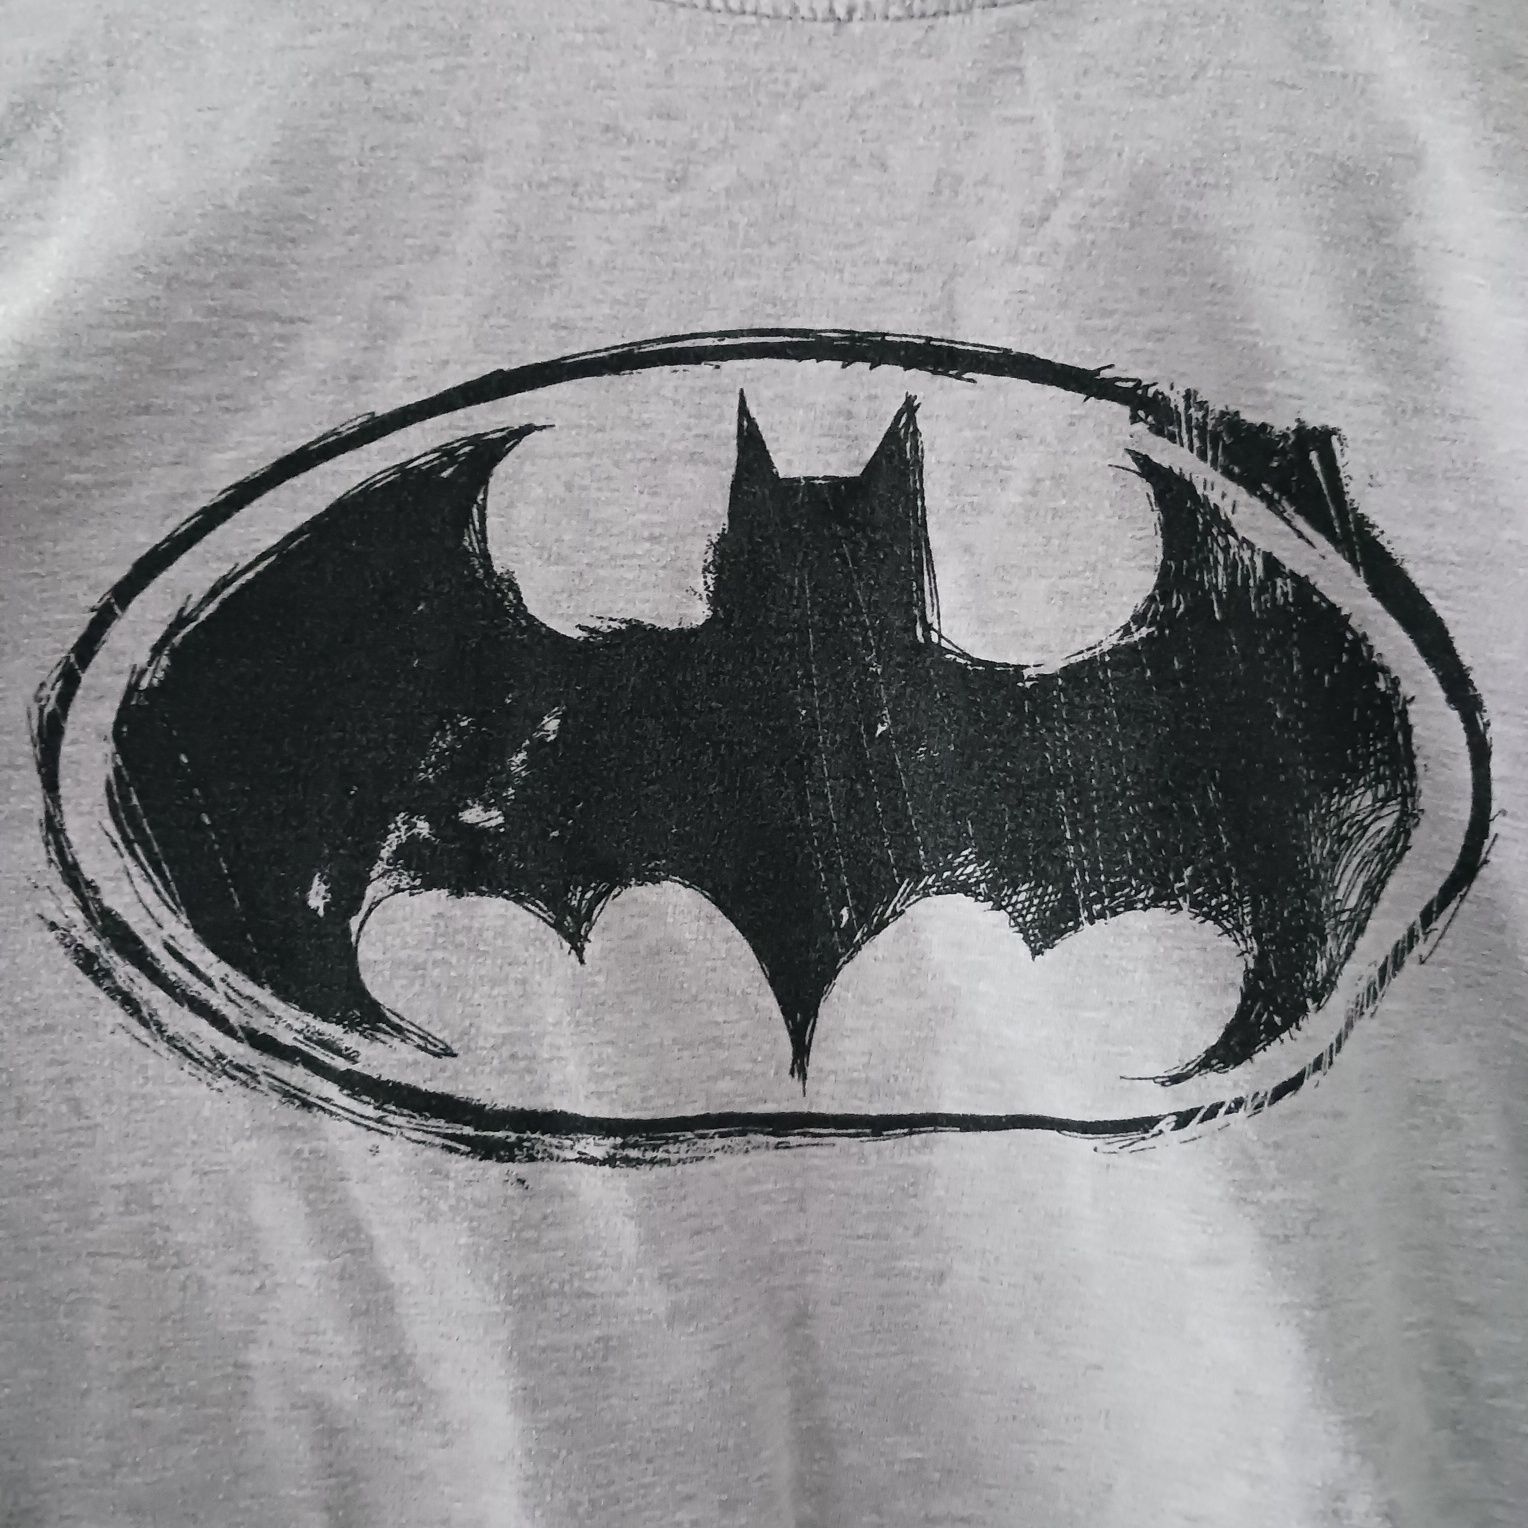 Bluza dresowa Batman rozm. 158/164